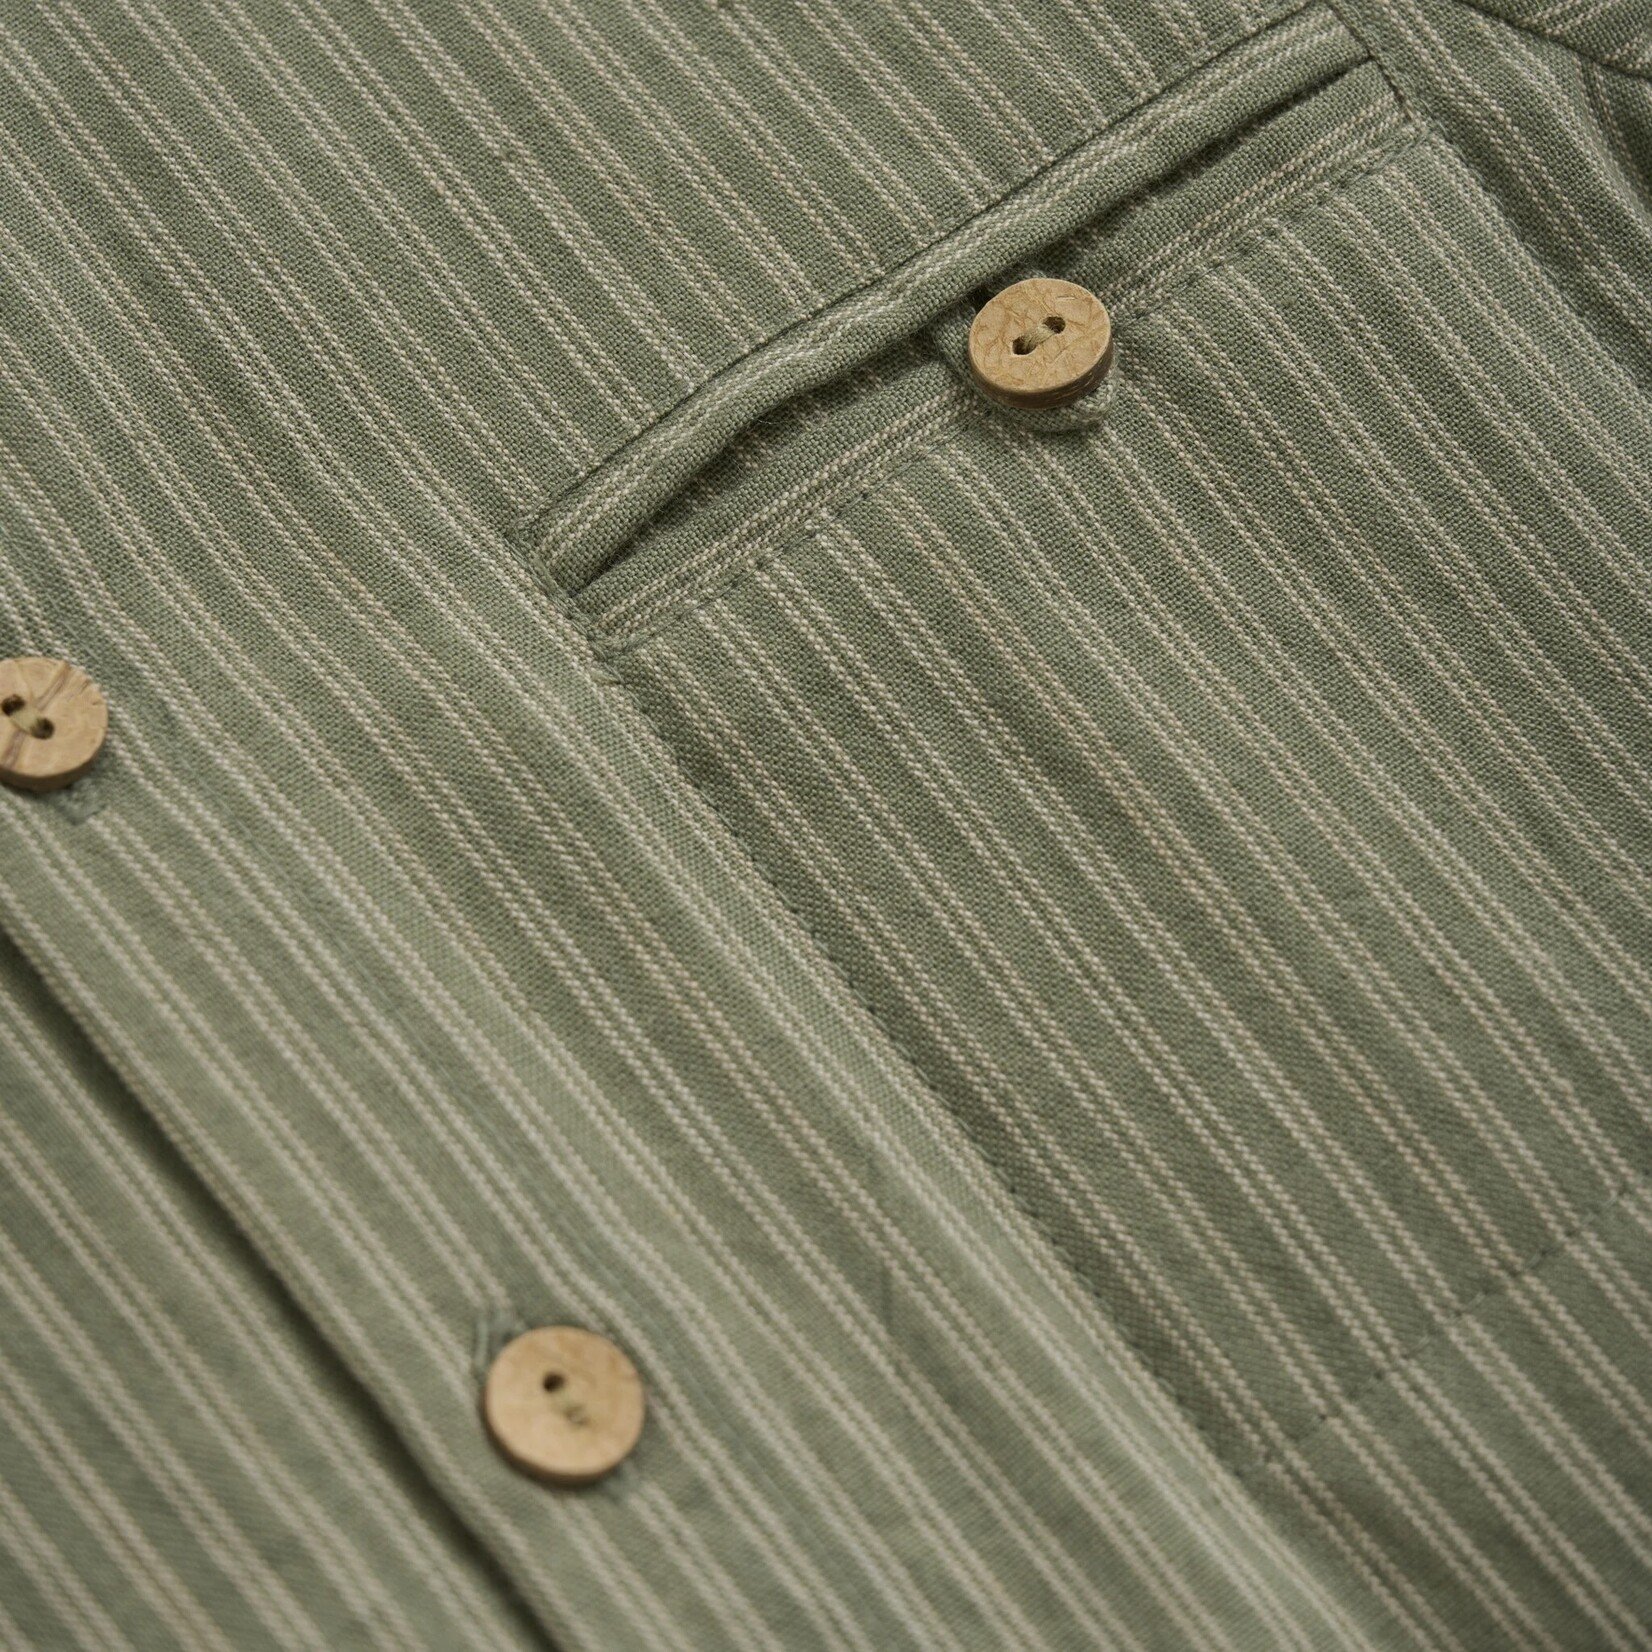 Enfant ENFANT - Short-sleeved verdigris shirt with cream-white lines